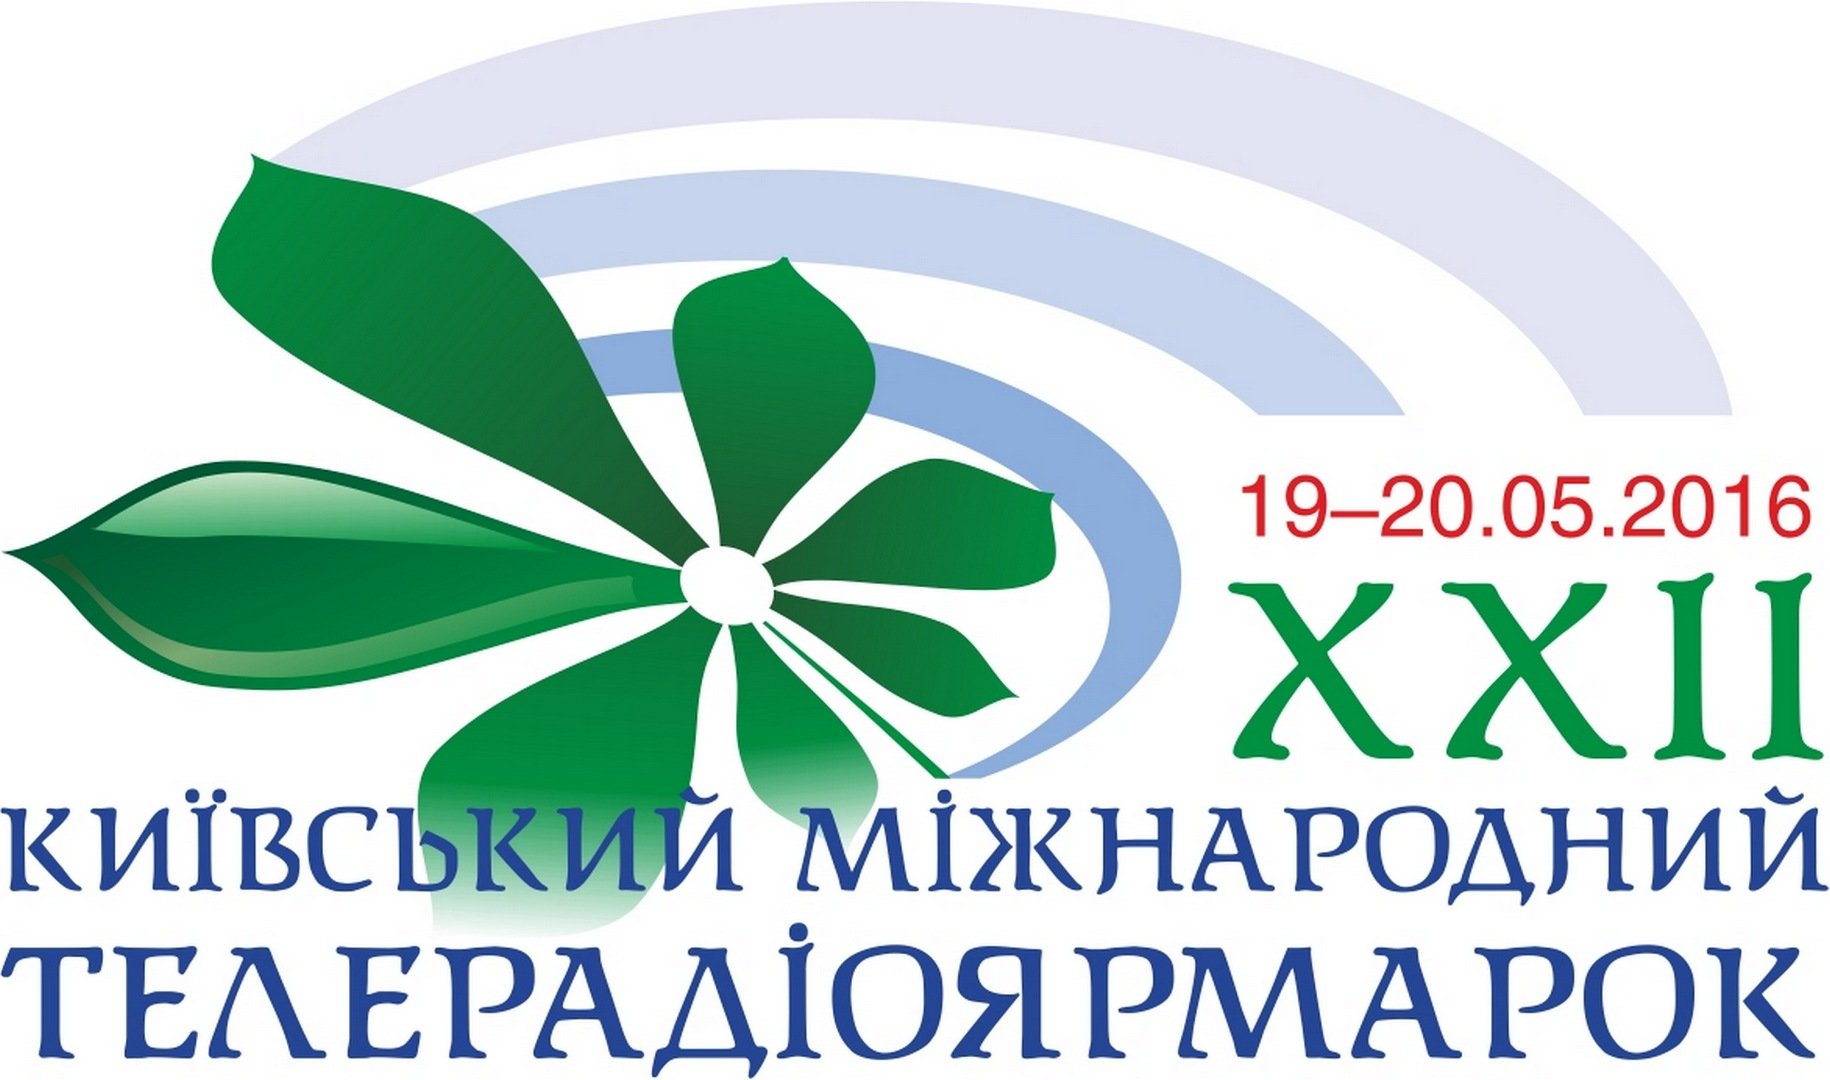 XXII Kyiv International TV & Radio Fair